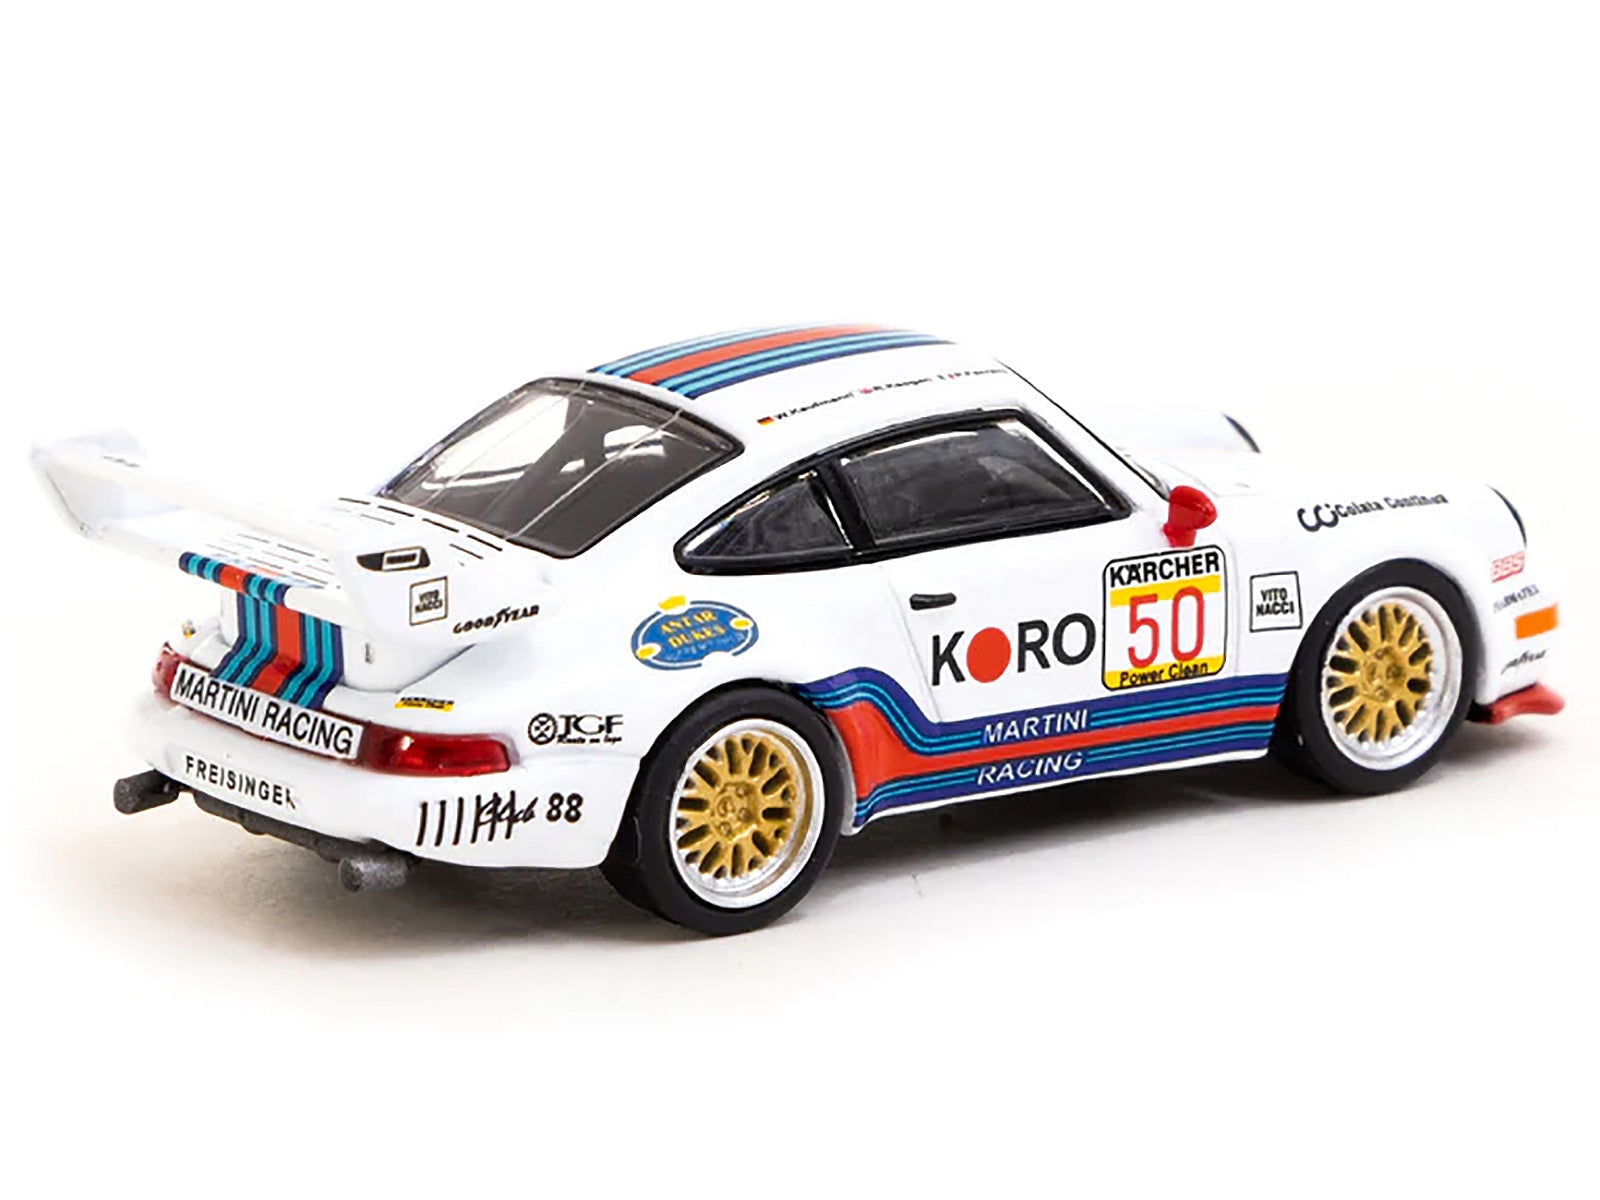 Porsche 911 Turbo S LM GT #50 Wolfgang Kaufmann - Rupert Keegan - Pietro Ferrero "Martini Racing" "BRP GT Series" (1995) "Collab64" Series 1/64 Diecast Model Car by Schuco & Tarmac Works